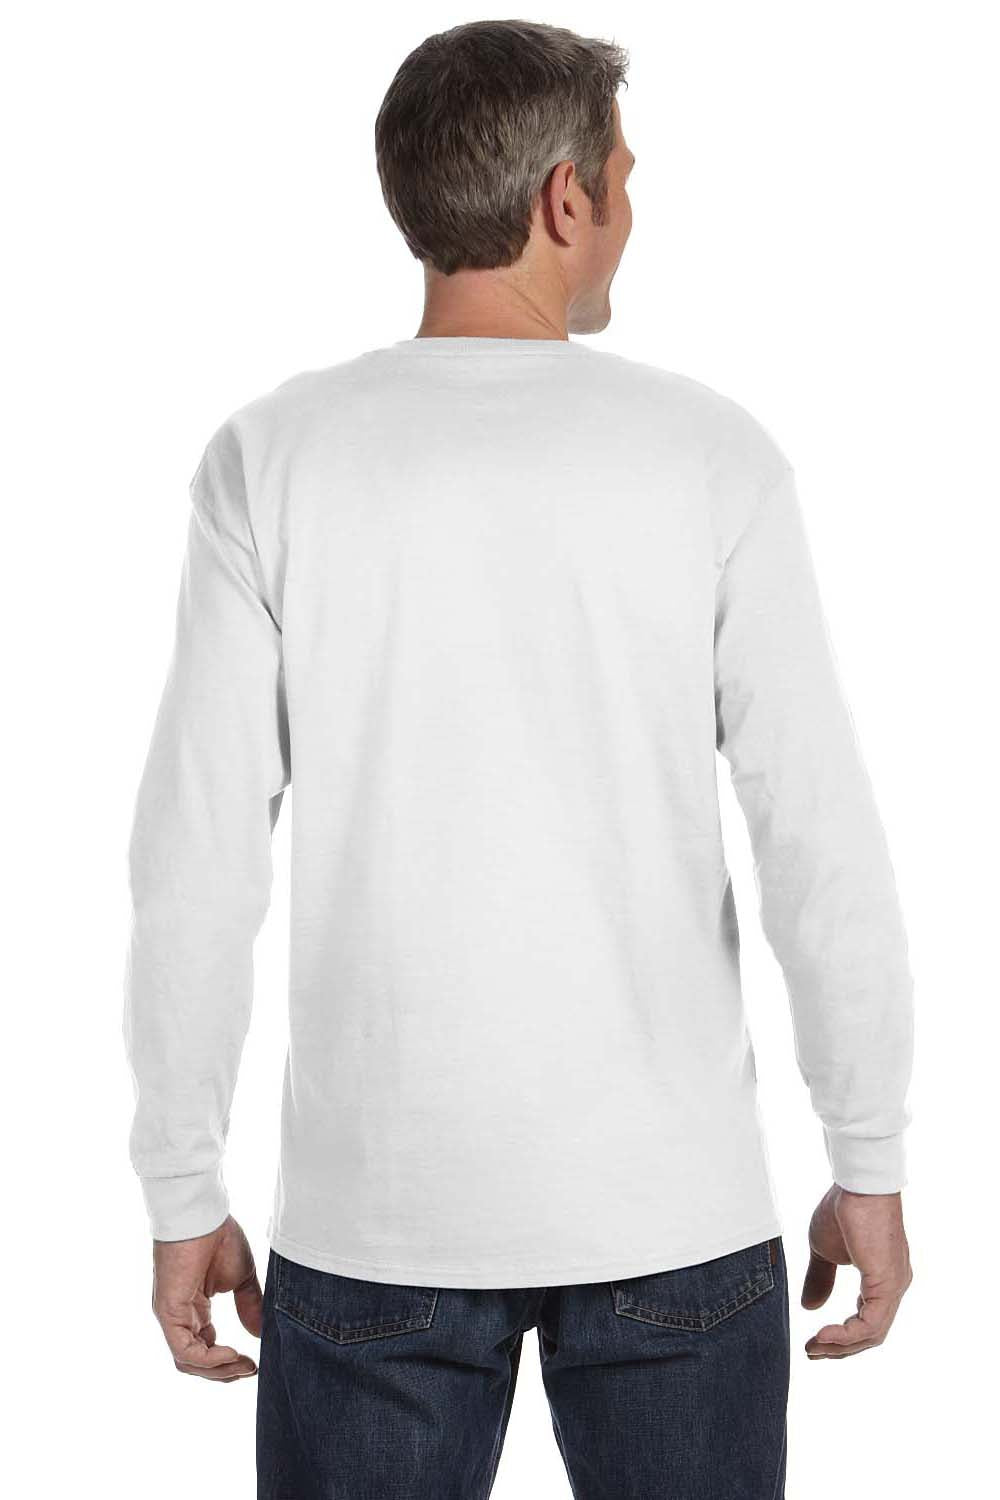 Jerzees 29L Mens Dri-Power Moisture Wicking Long Sleeve Crewneck T-Shirt White Back